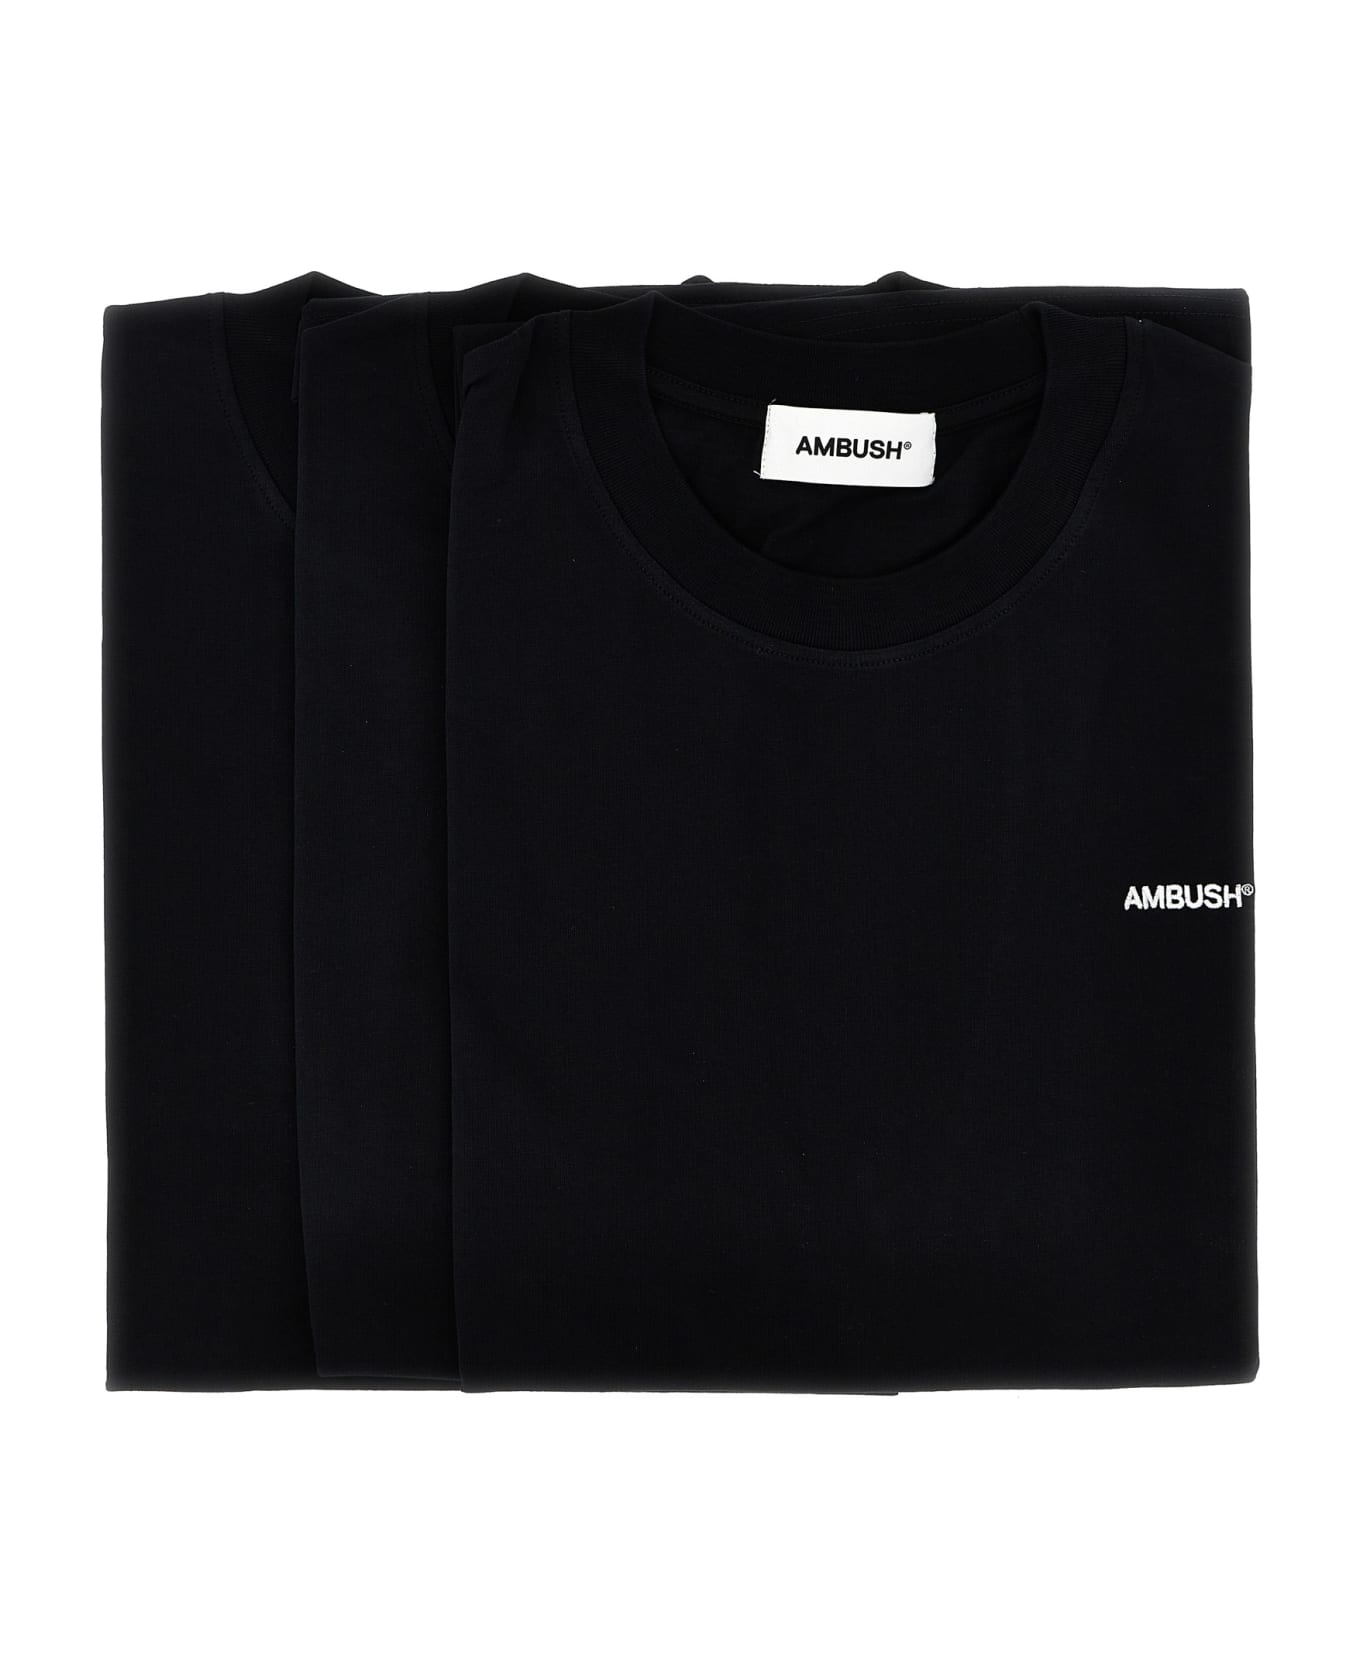 AMBUSH 3 Pack T-shirt - Black